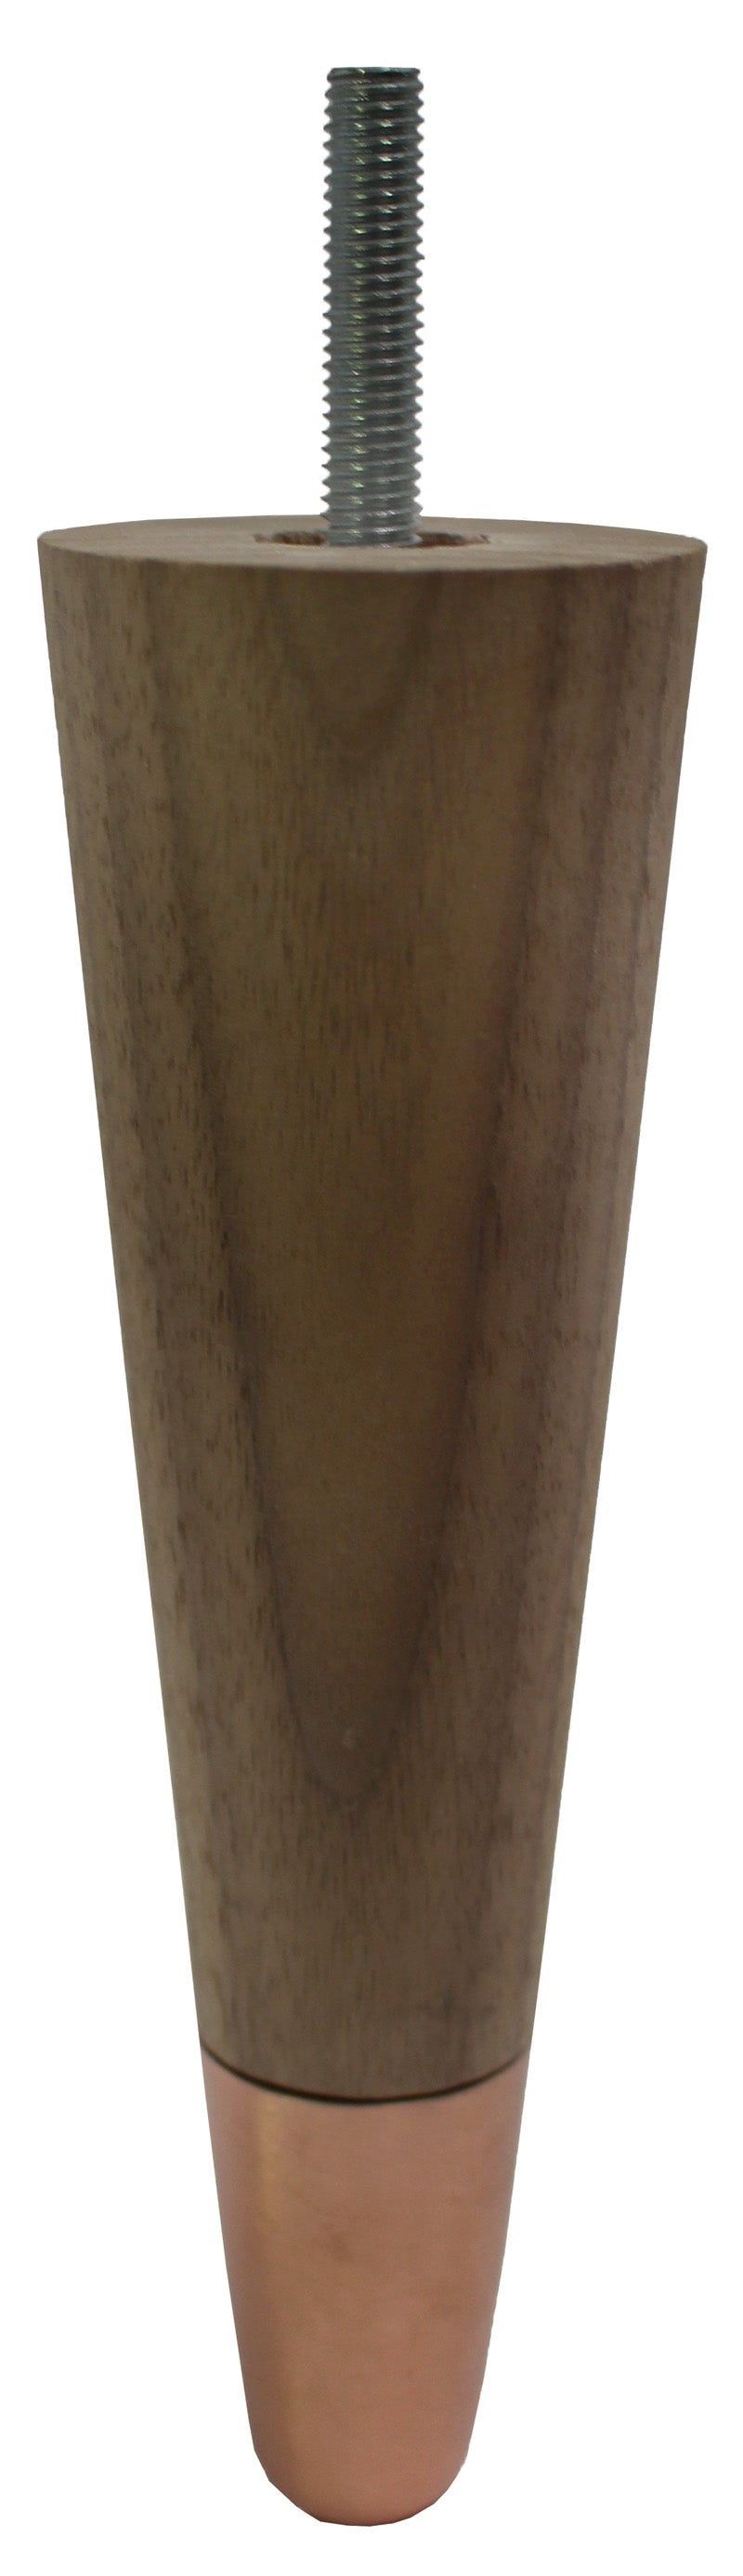 Agata Solid Walnut Tapered Furniture Legs - Raw Finish - Copper Slipper Cups - Set of 4